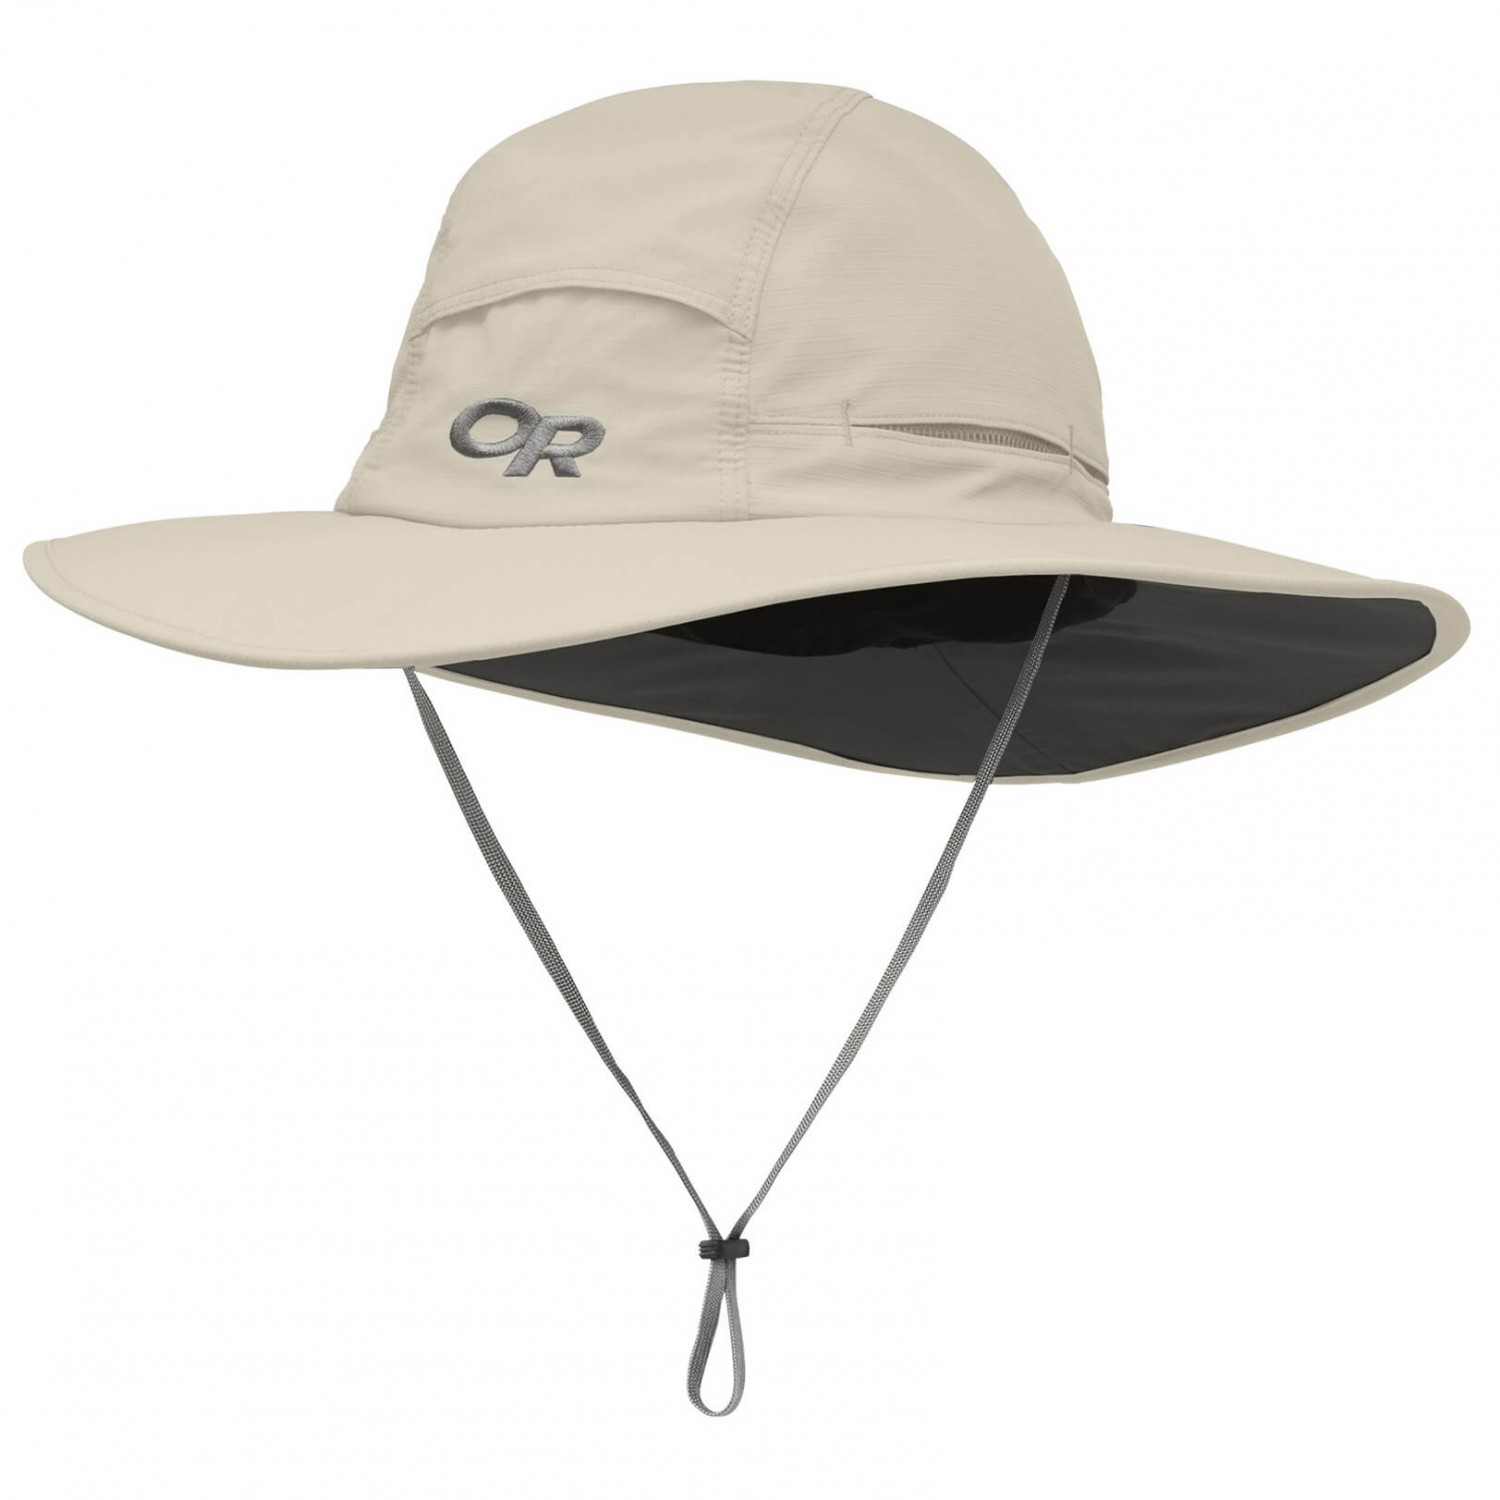 Кепка Outdoor Research Sombriolet Sun Hat, песочный 2021 new unisex fisherman hat female summer sunscreen panama hat men s solid color sun hat outdoor fisherman hat beach hat